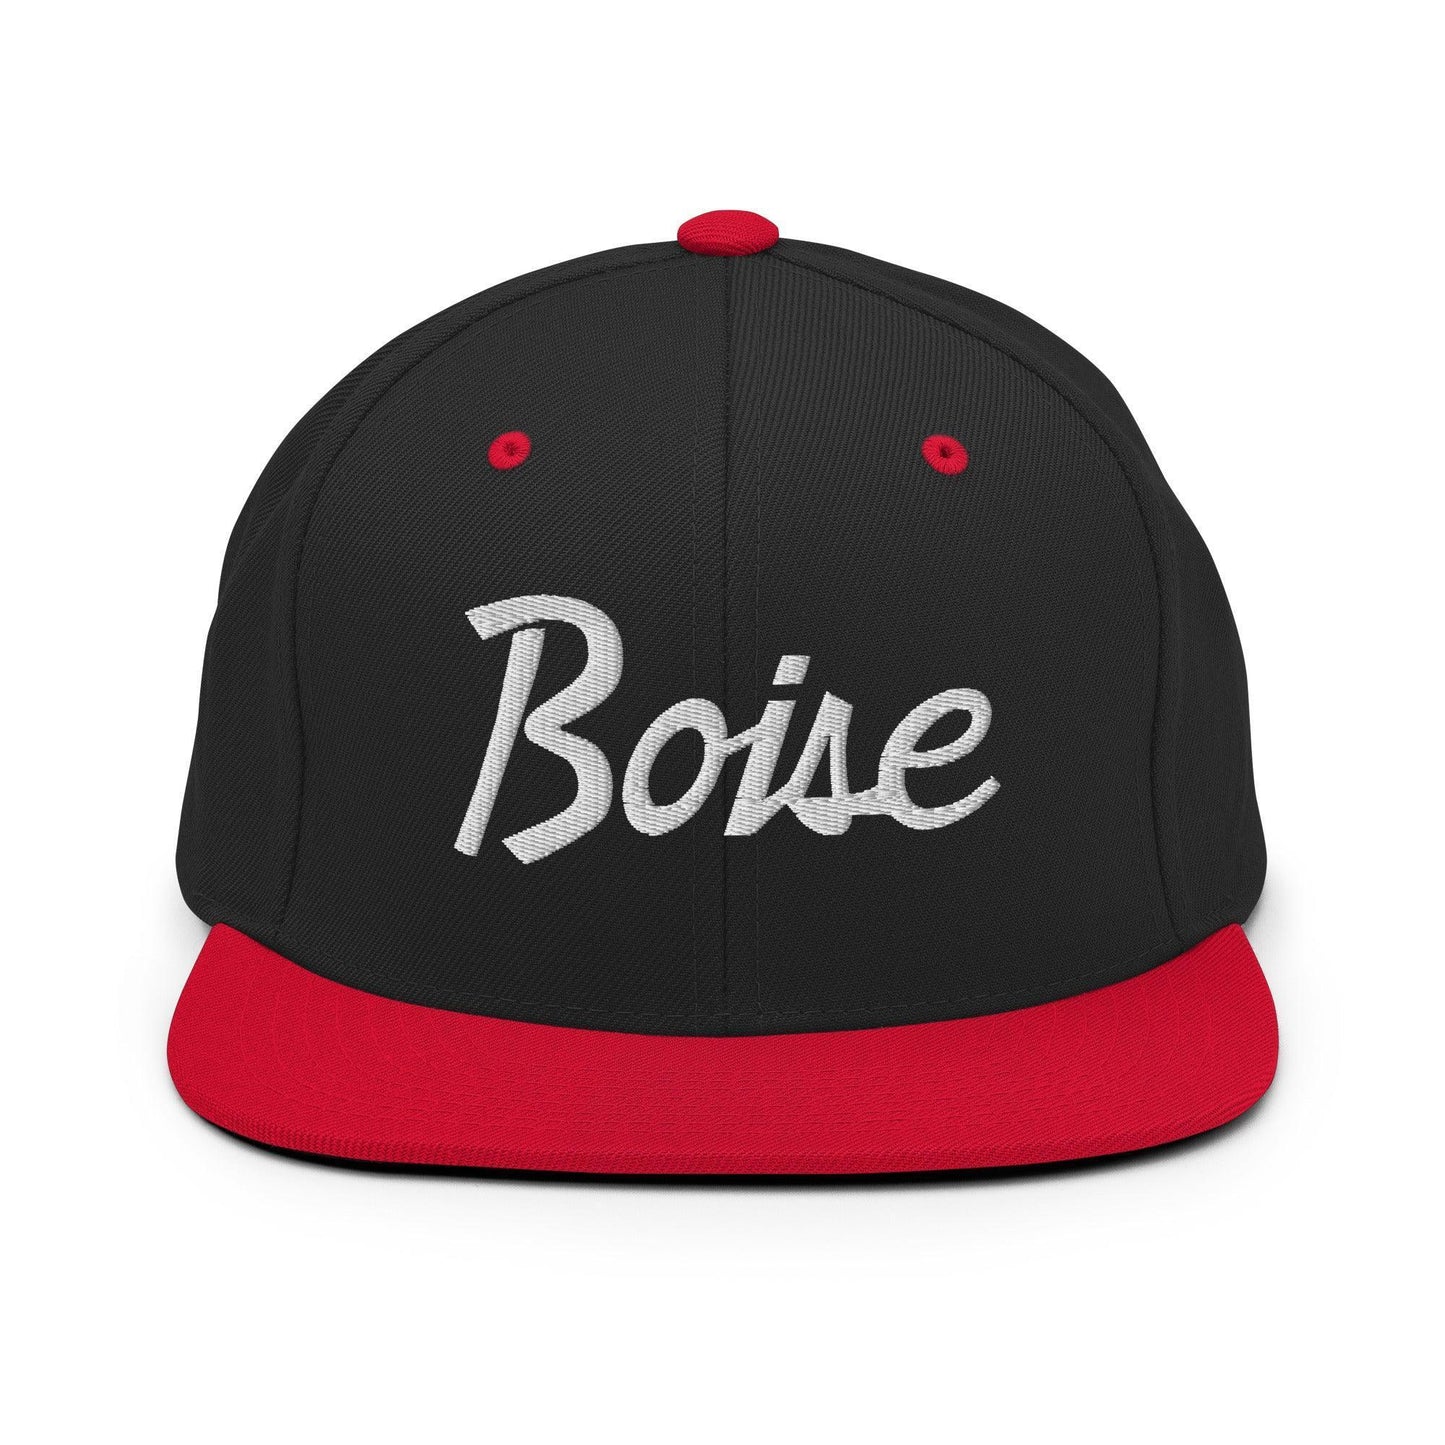 Boise Script Snapback Hat Black Red